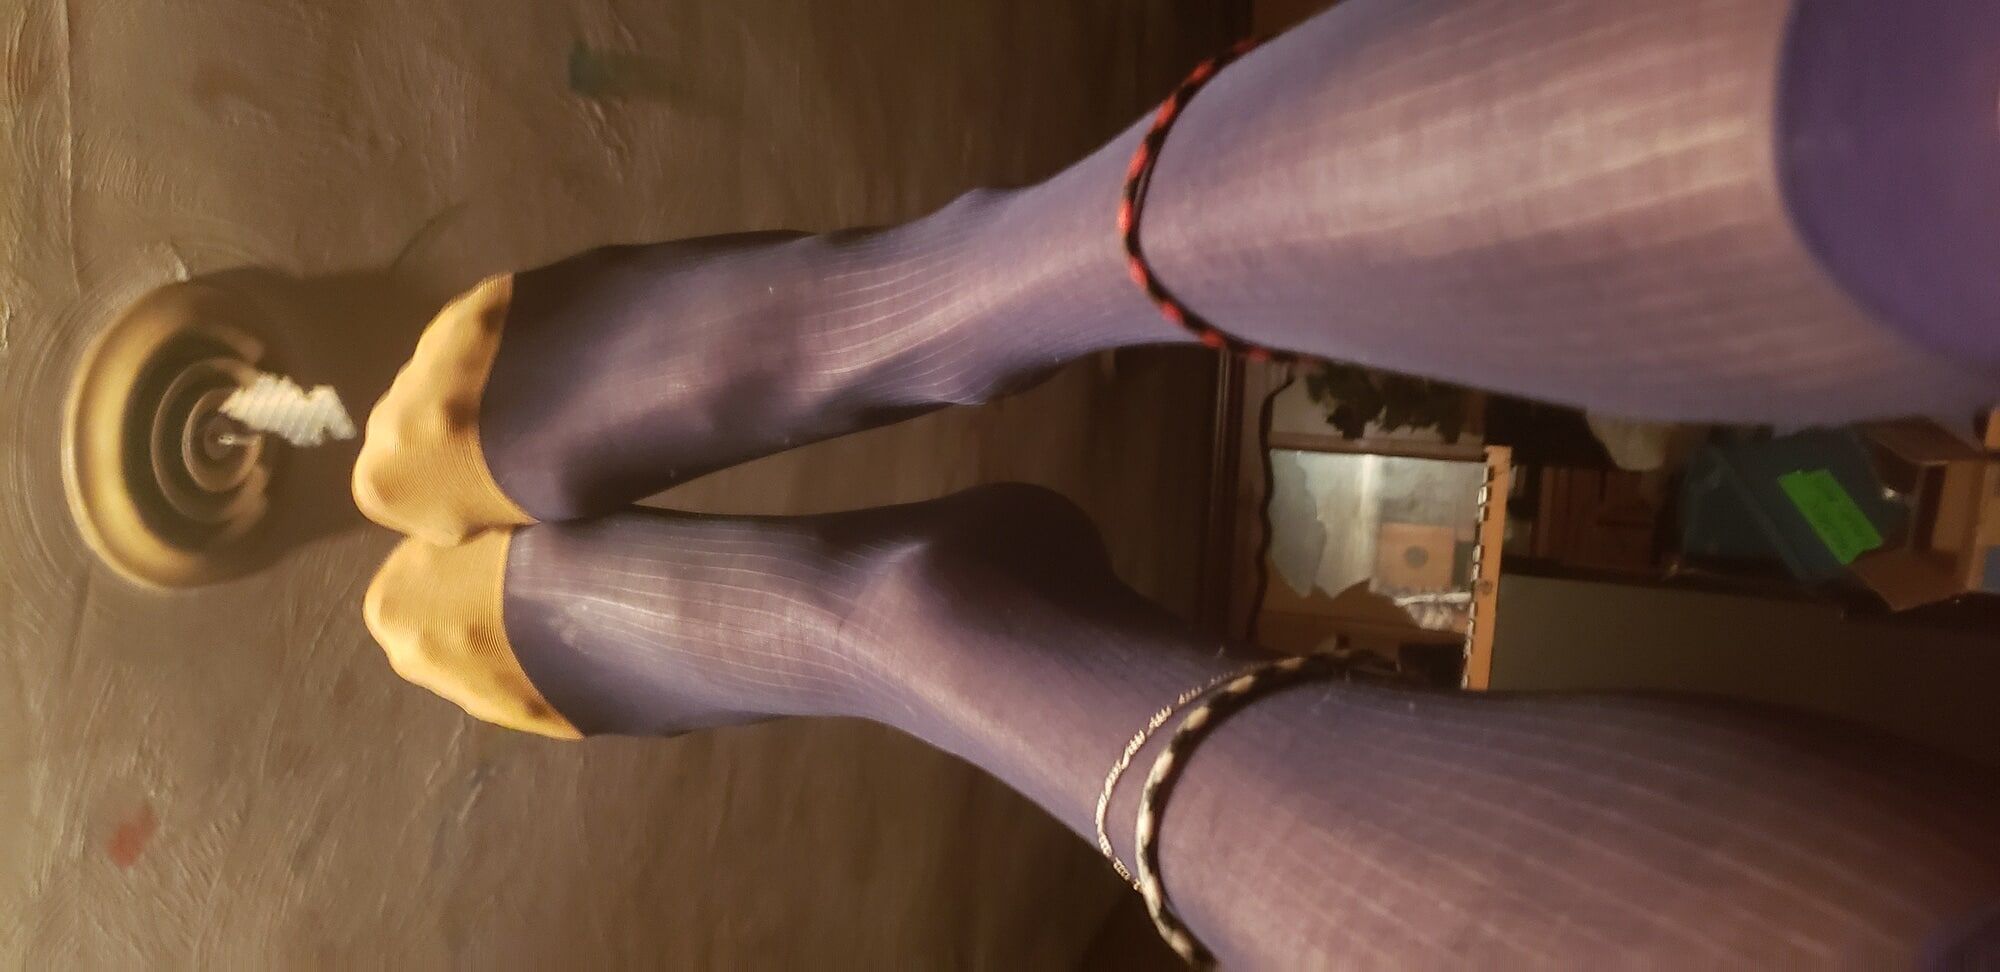 nylon Stockings #8